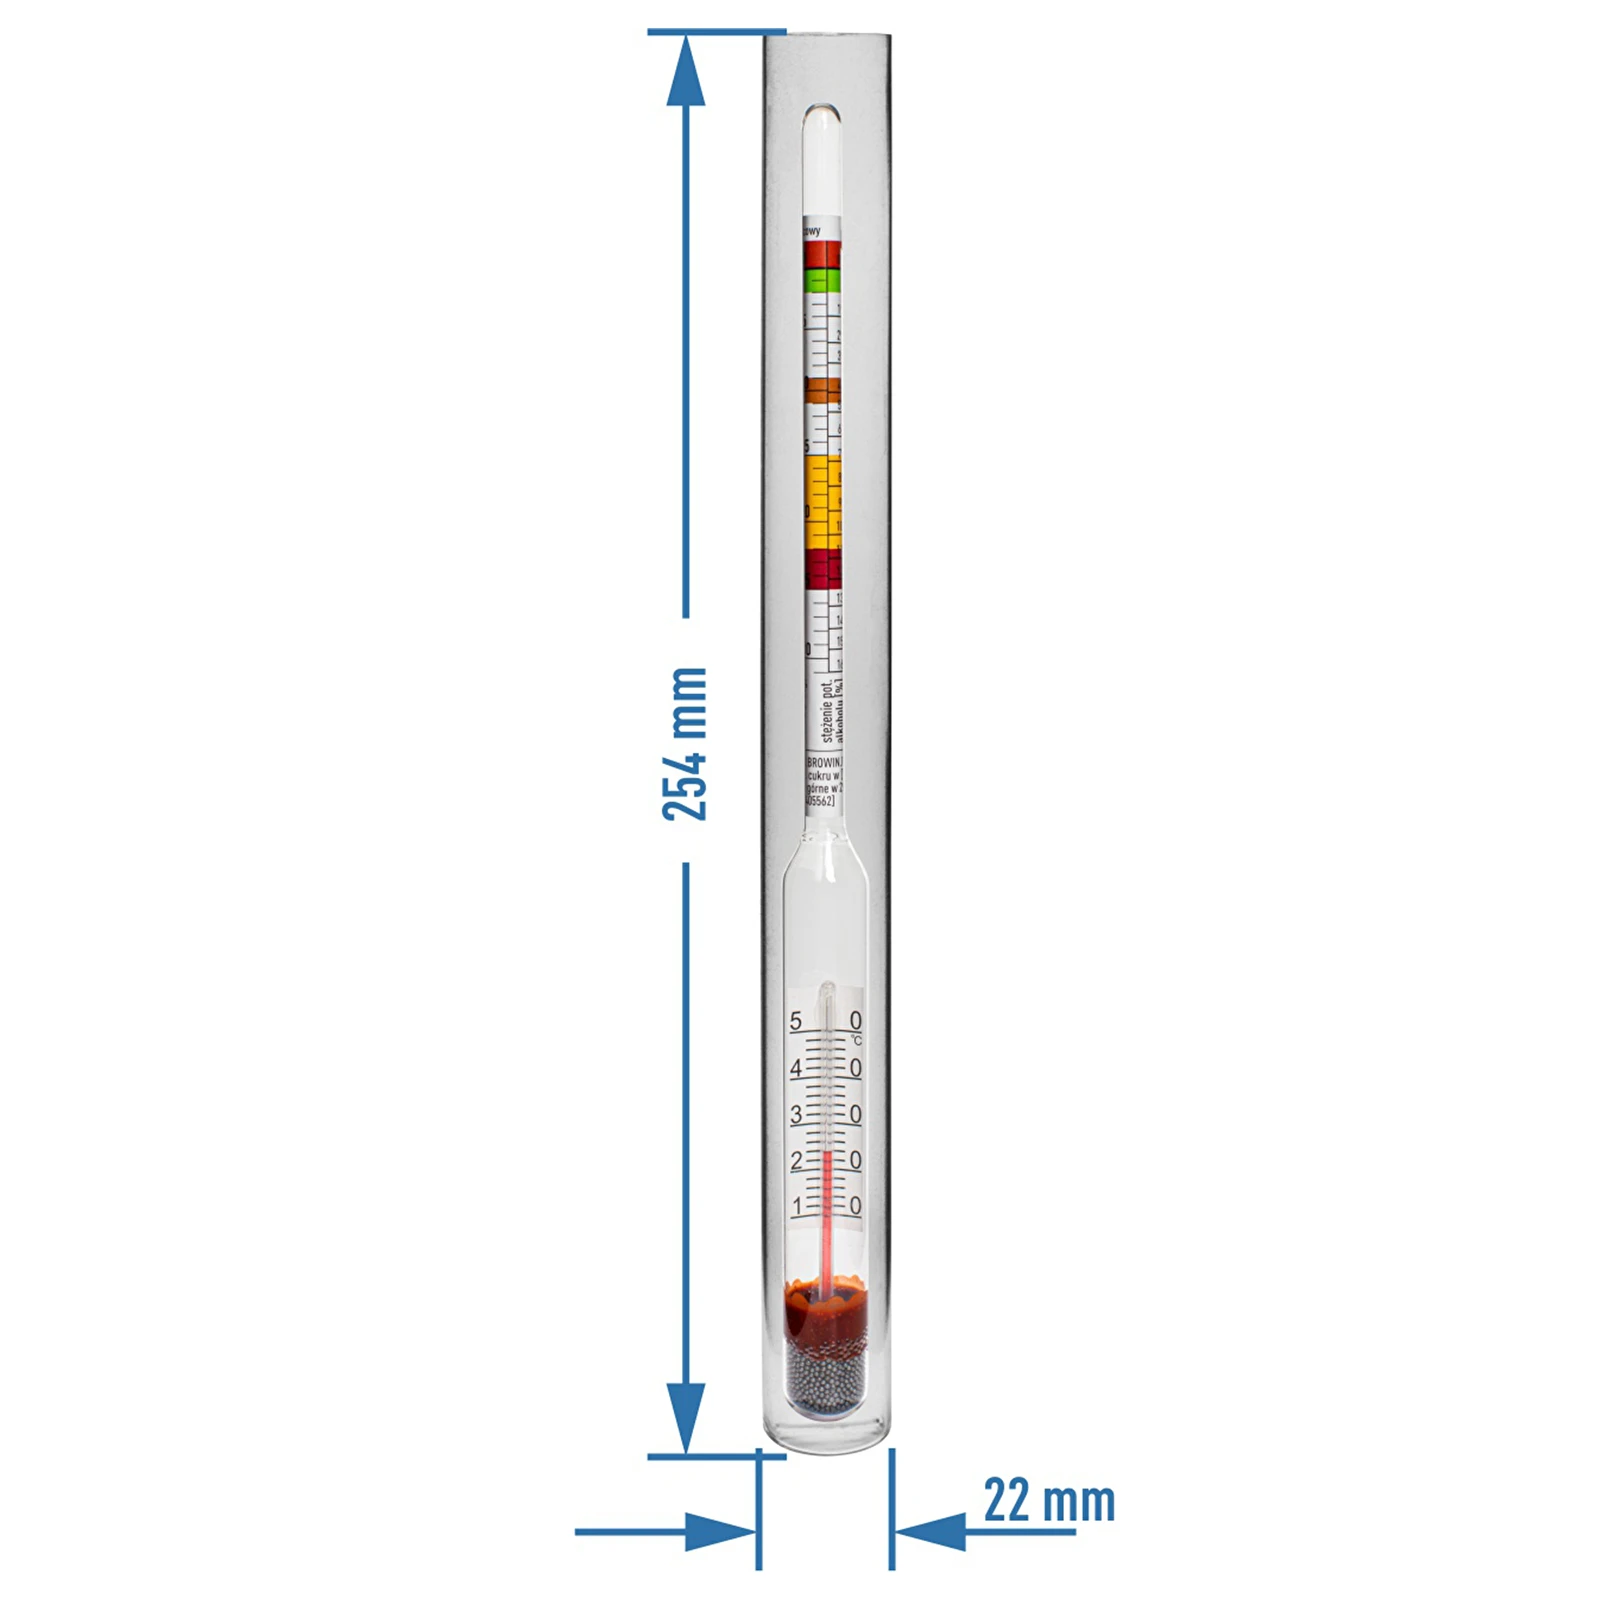 3pcs set Alcohol Meter Measuring Instrument Vinometer Thermometer